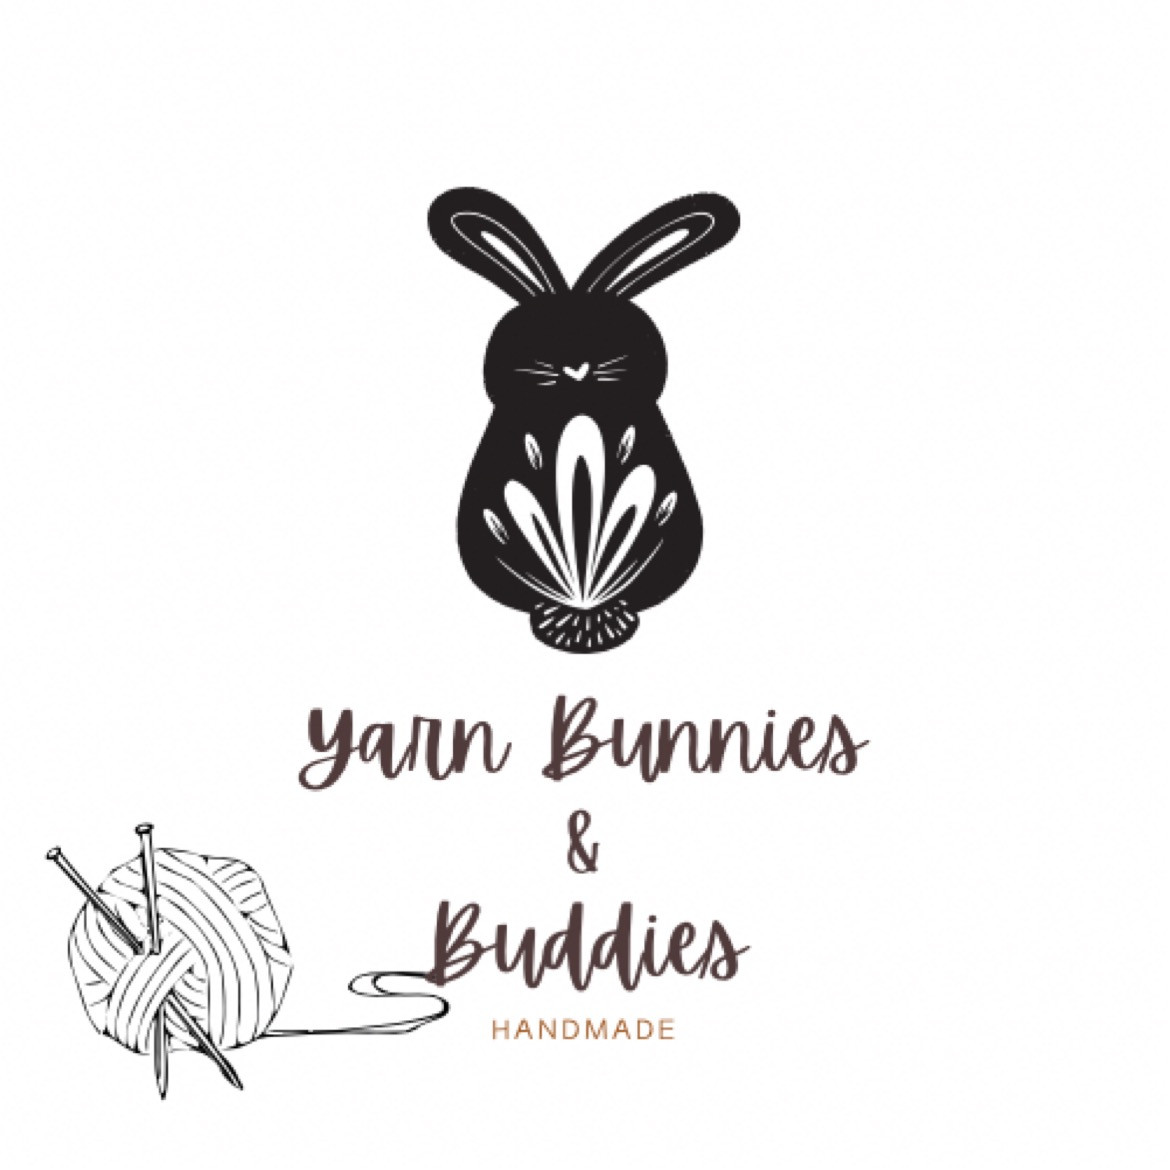 Yarn bunnies and buddies